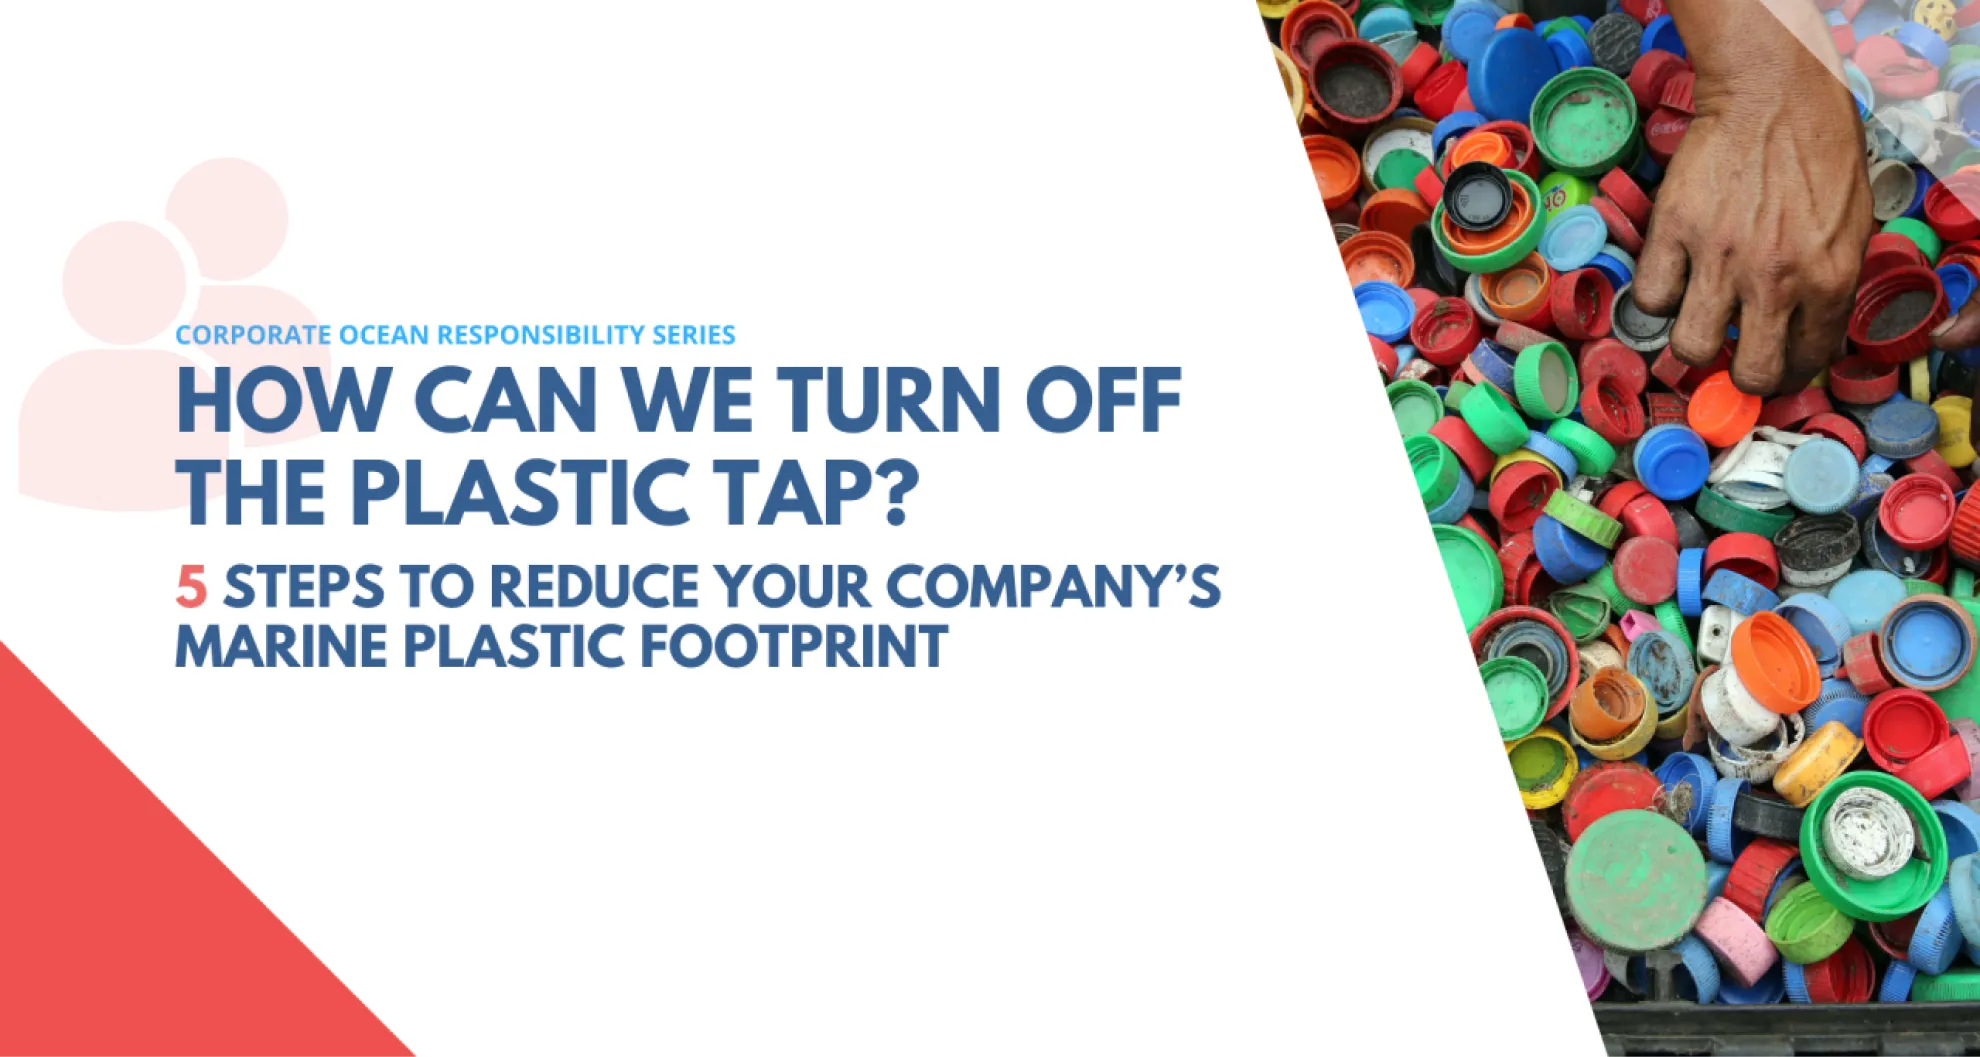 Reduce plastic footprint